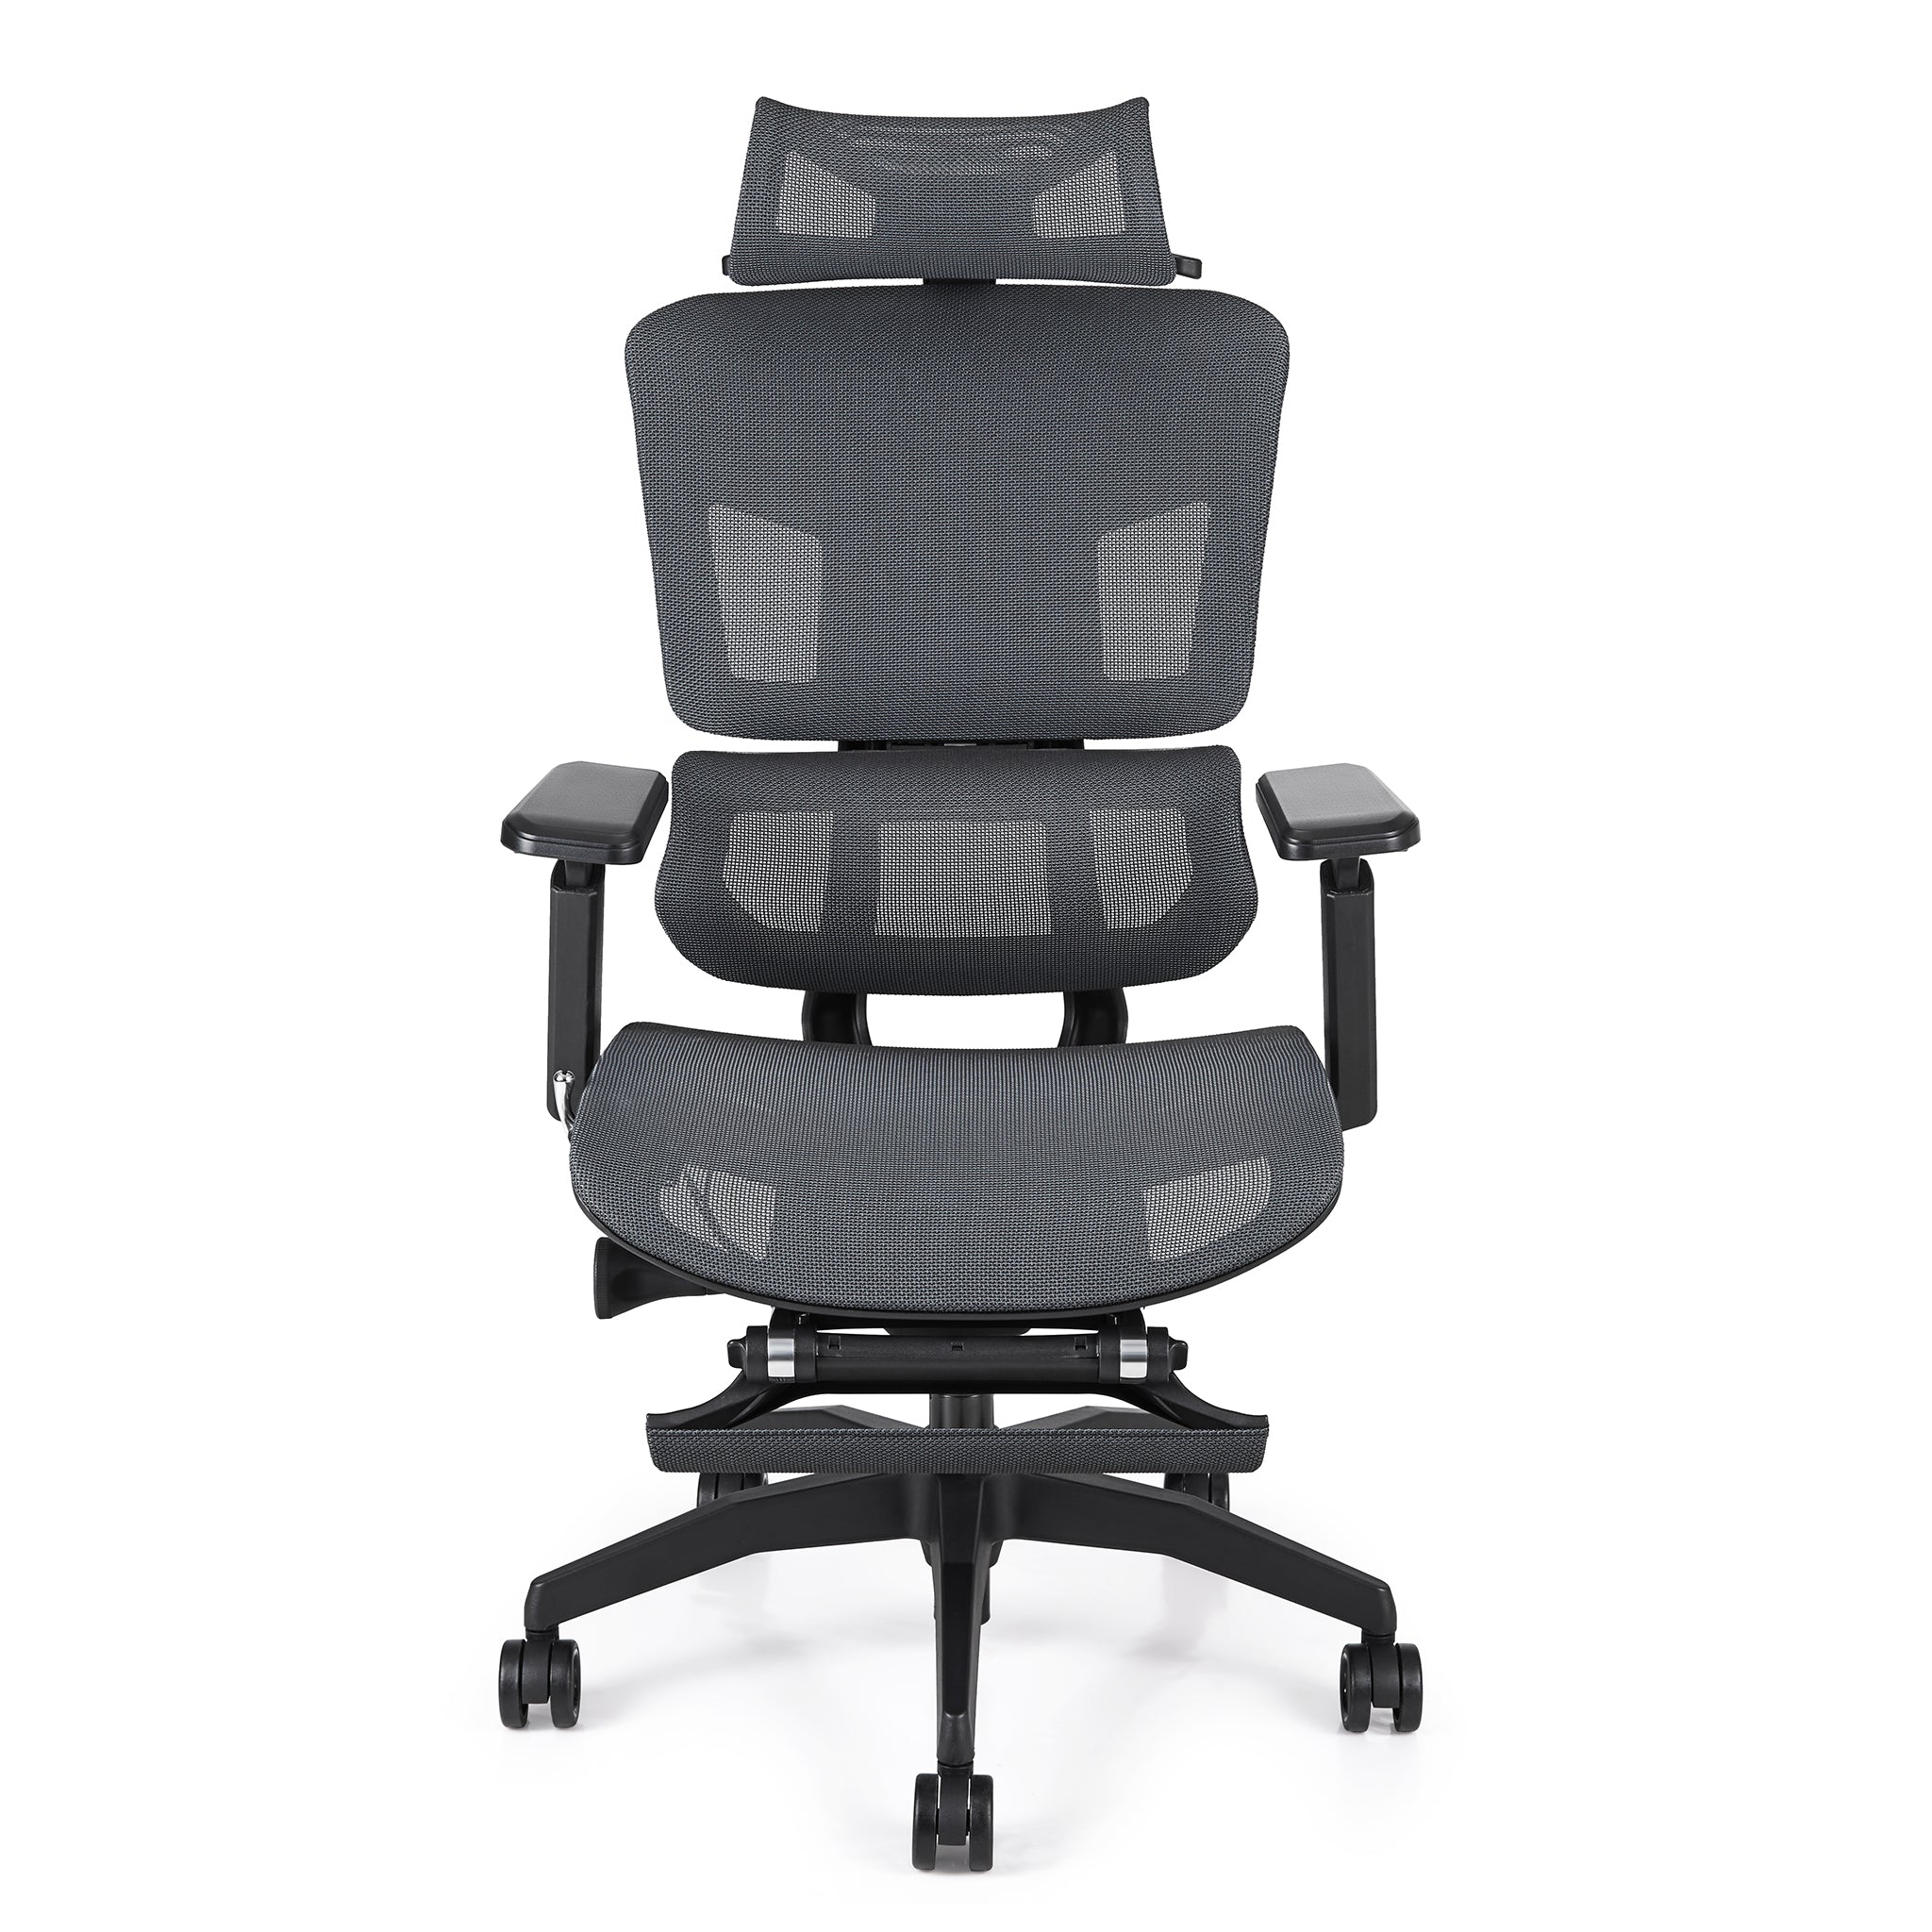 COFO Chair Premium グレー - デスクチェア